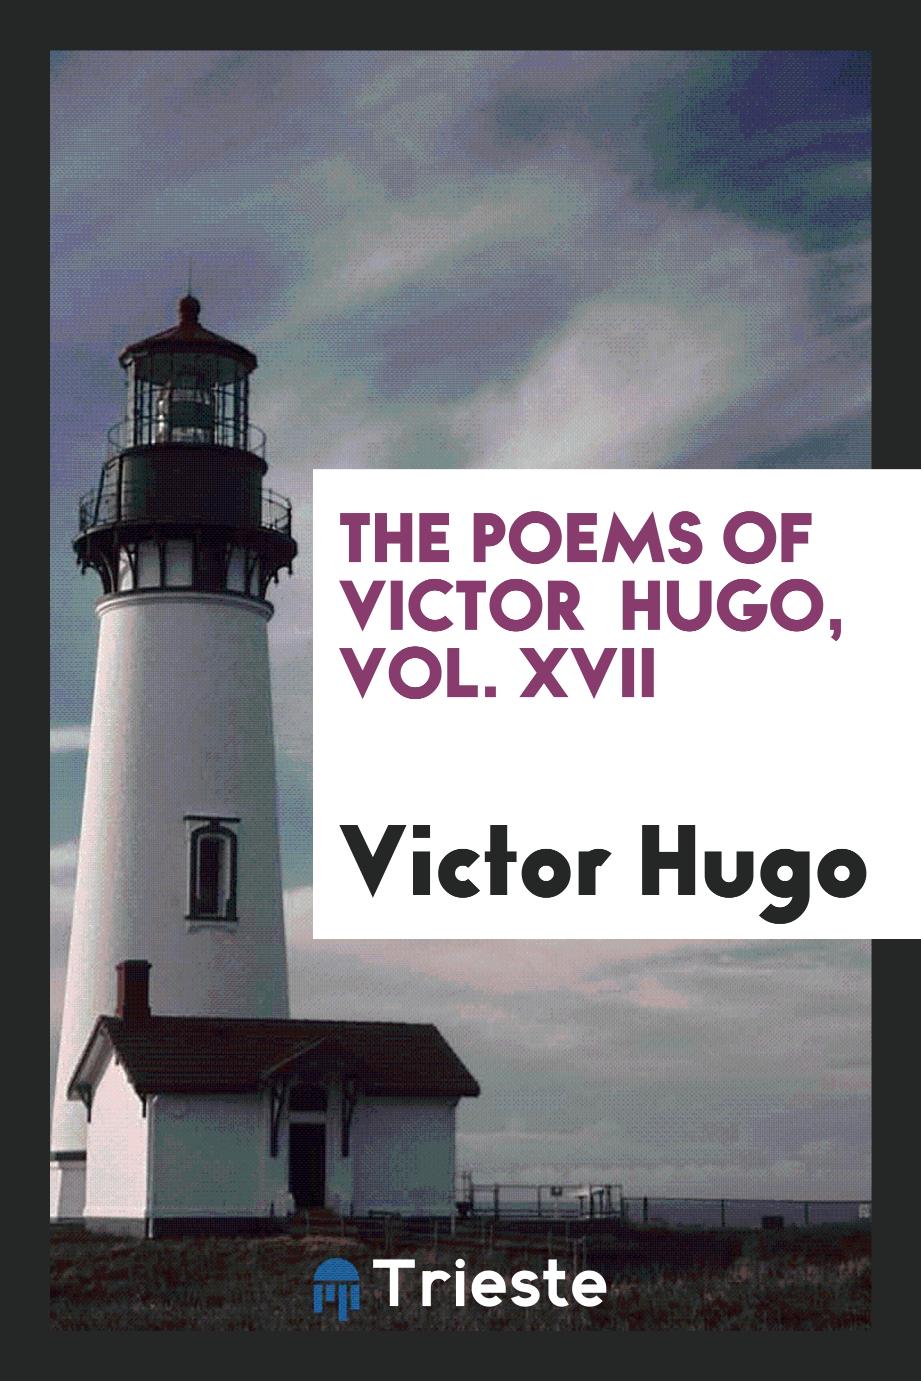 The poems of Victor Hugo, Vol. XVII